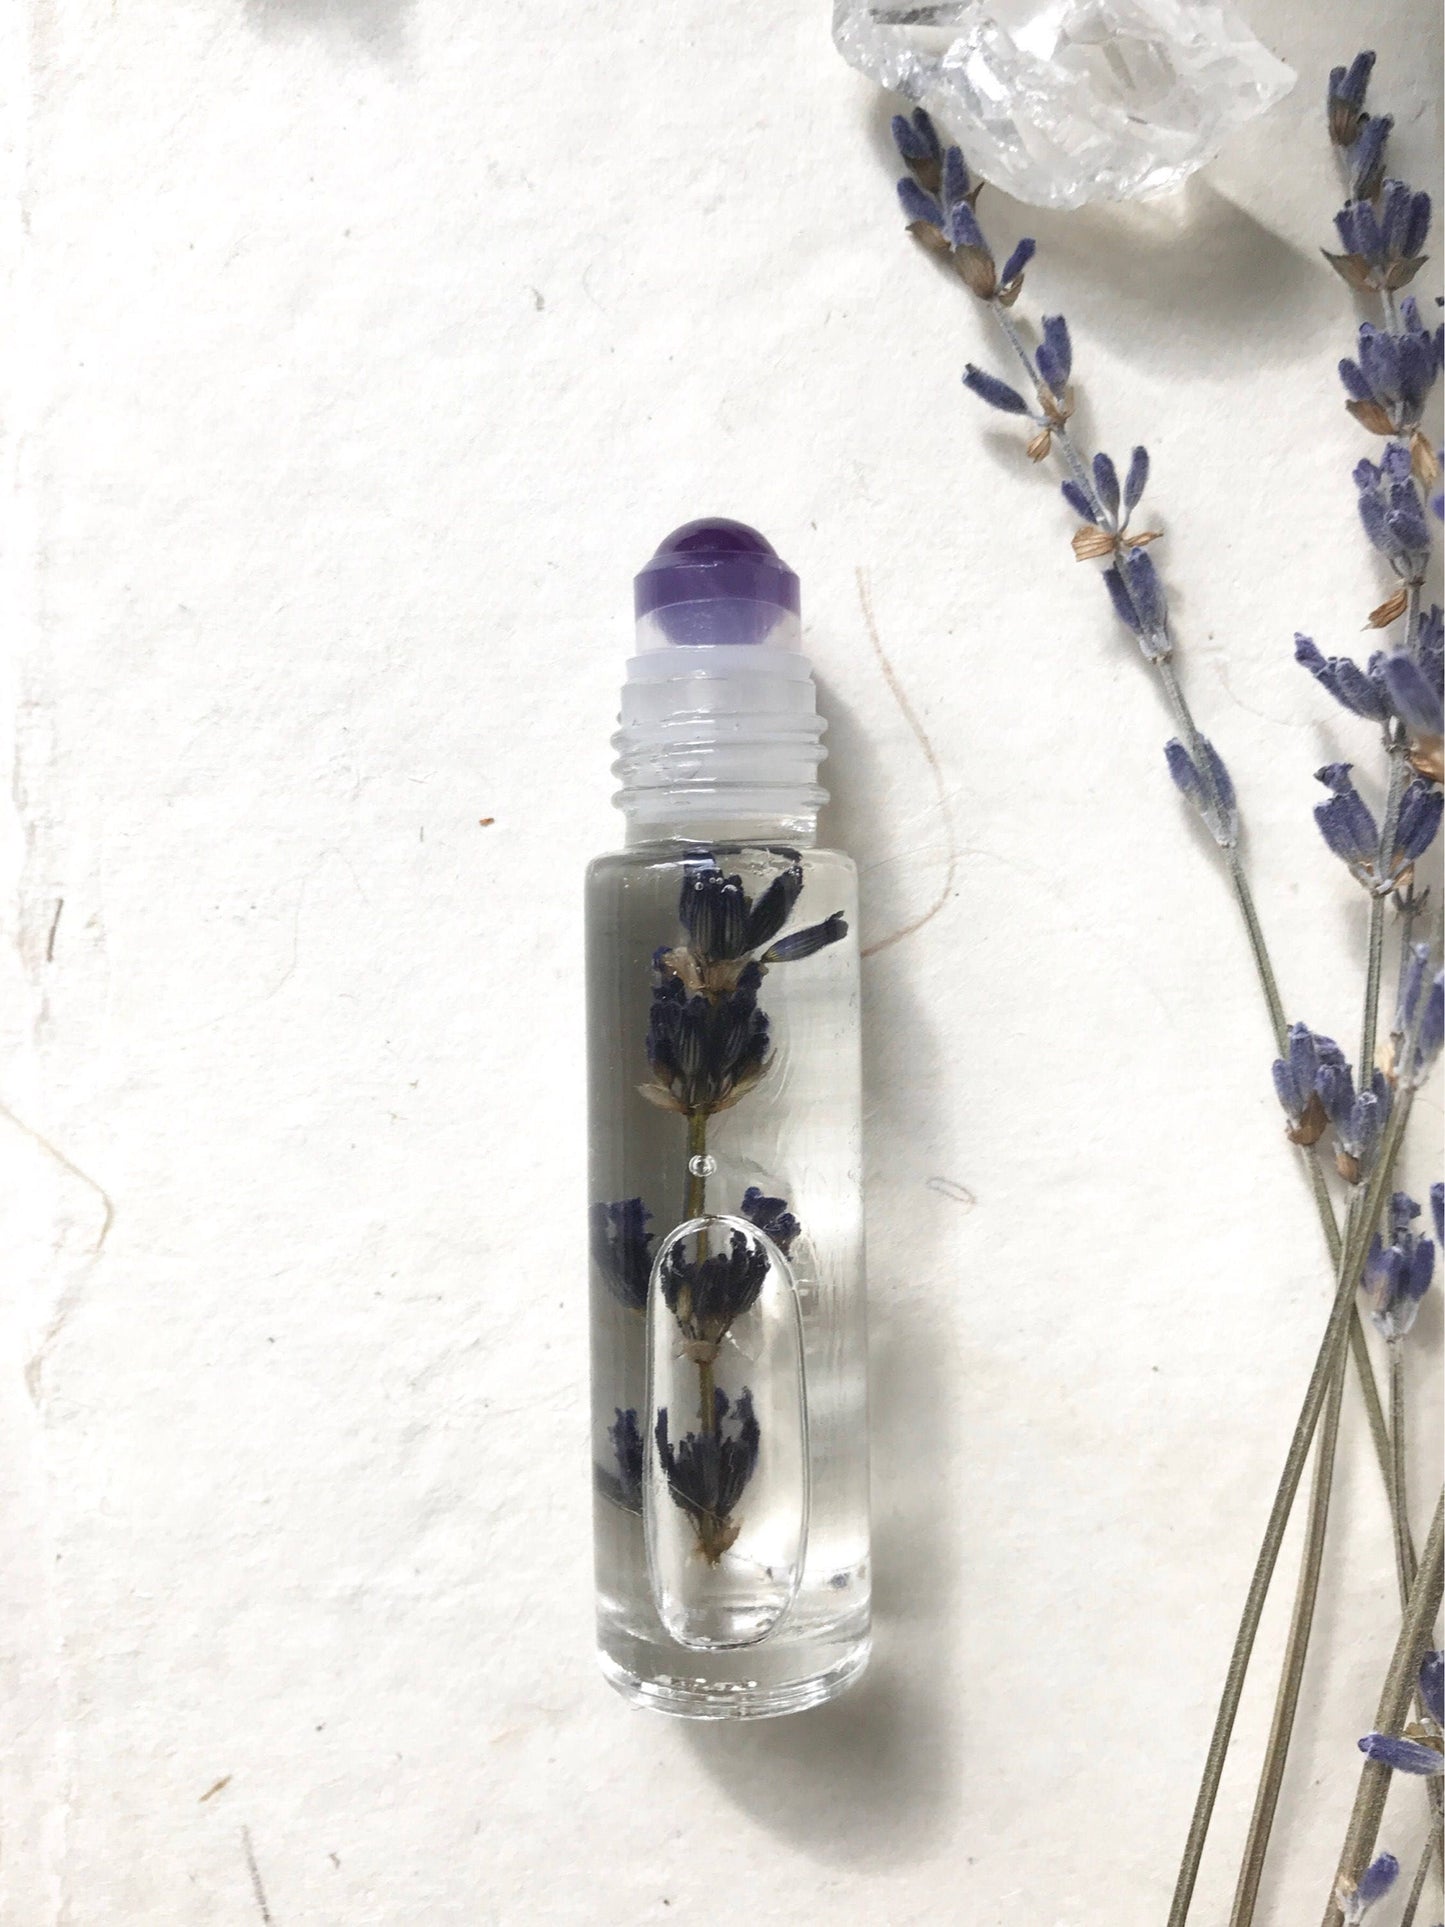 Crystalline "Inspired Insight" Essential Oil Roller - Amethsyt and Lavender